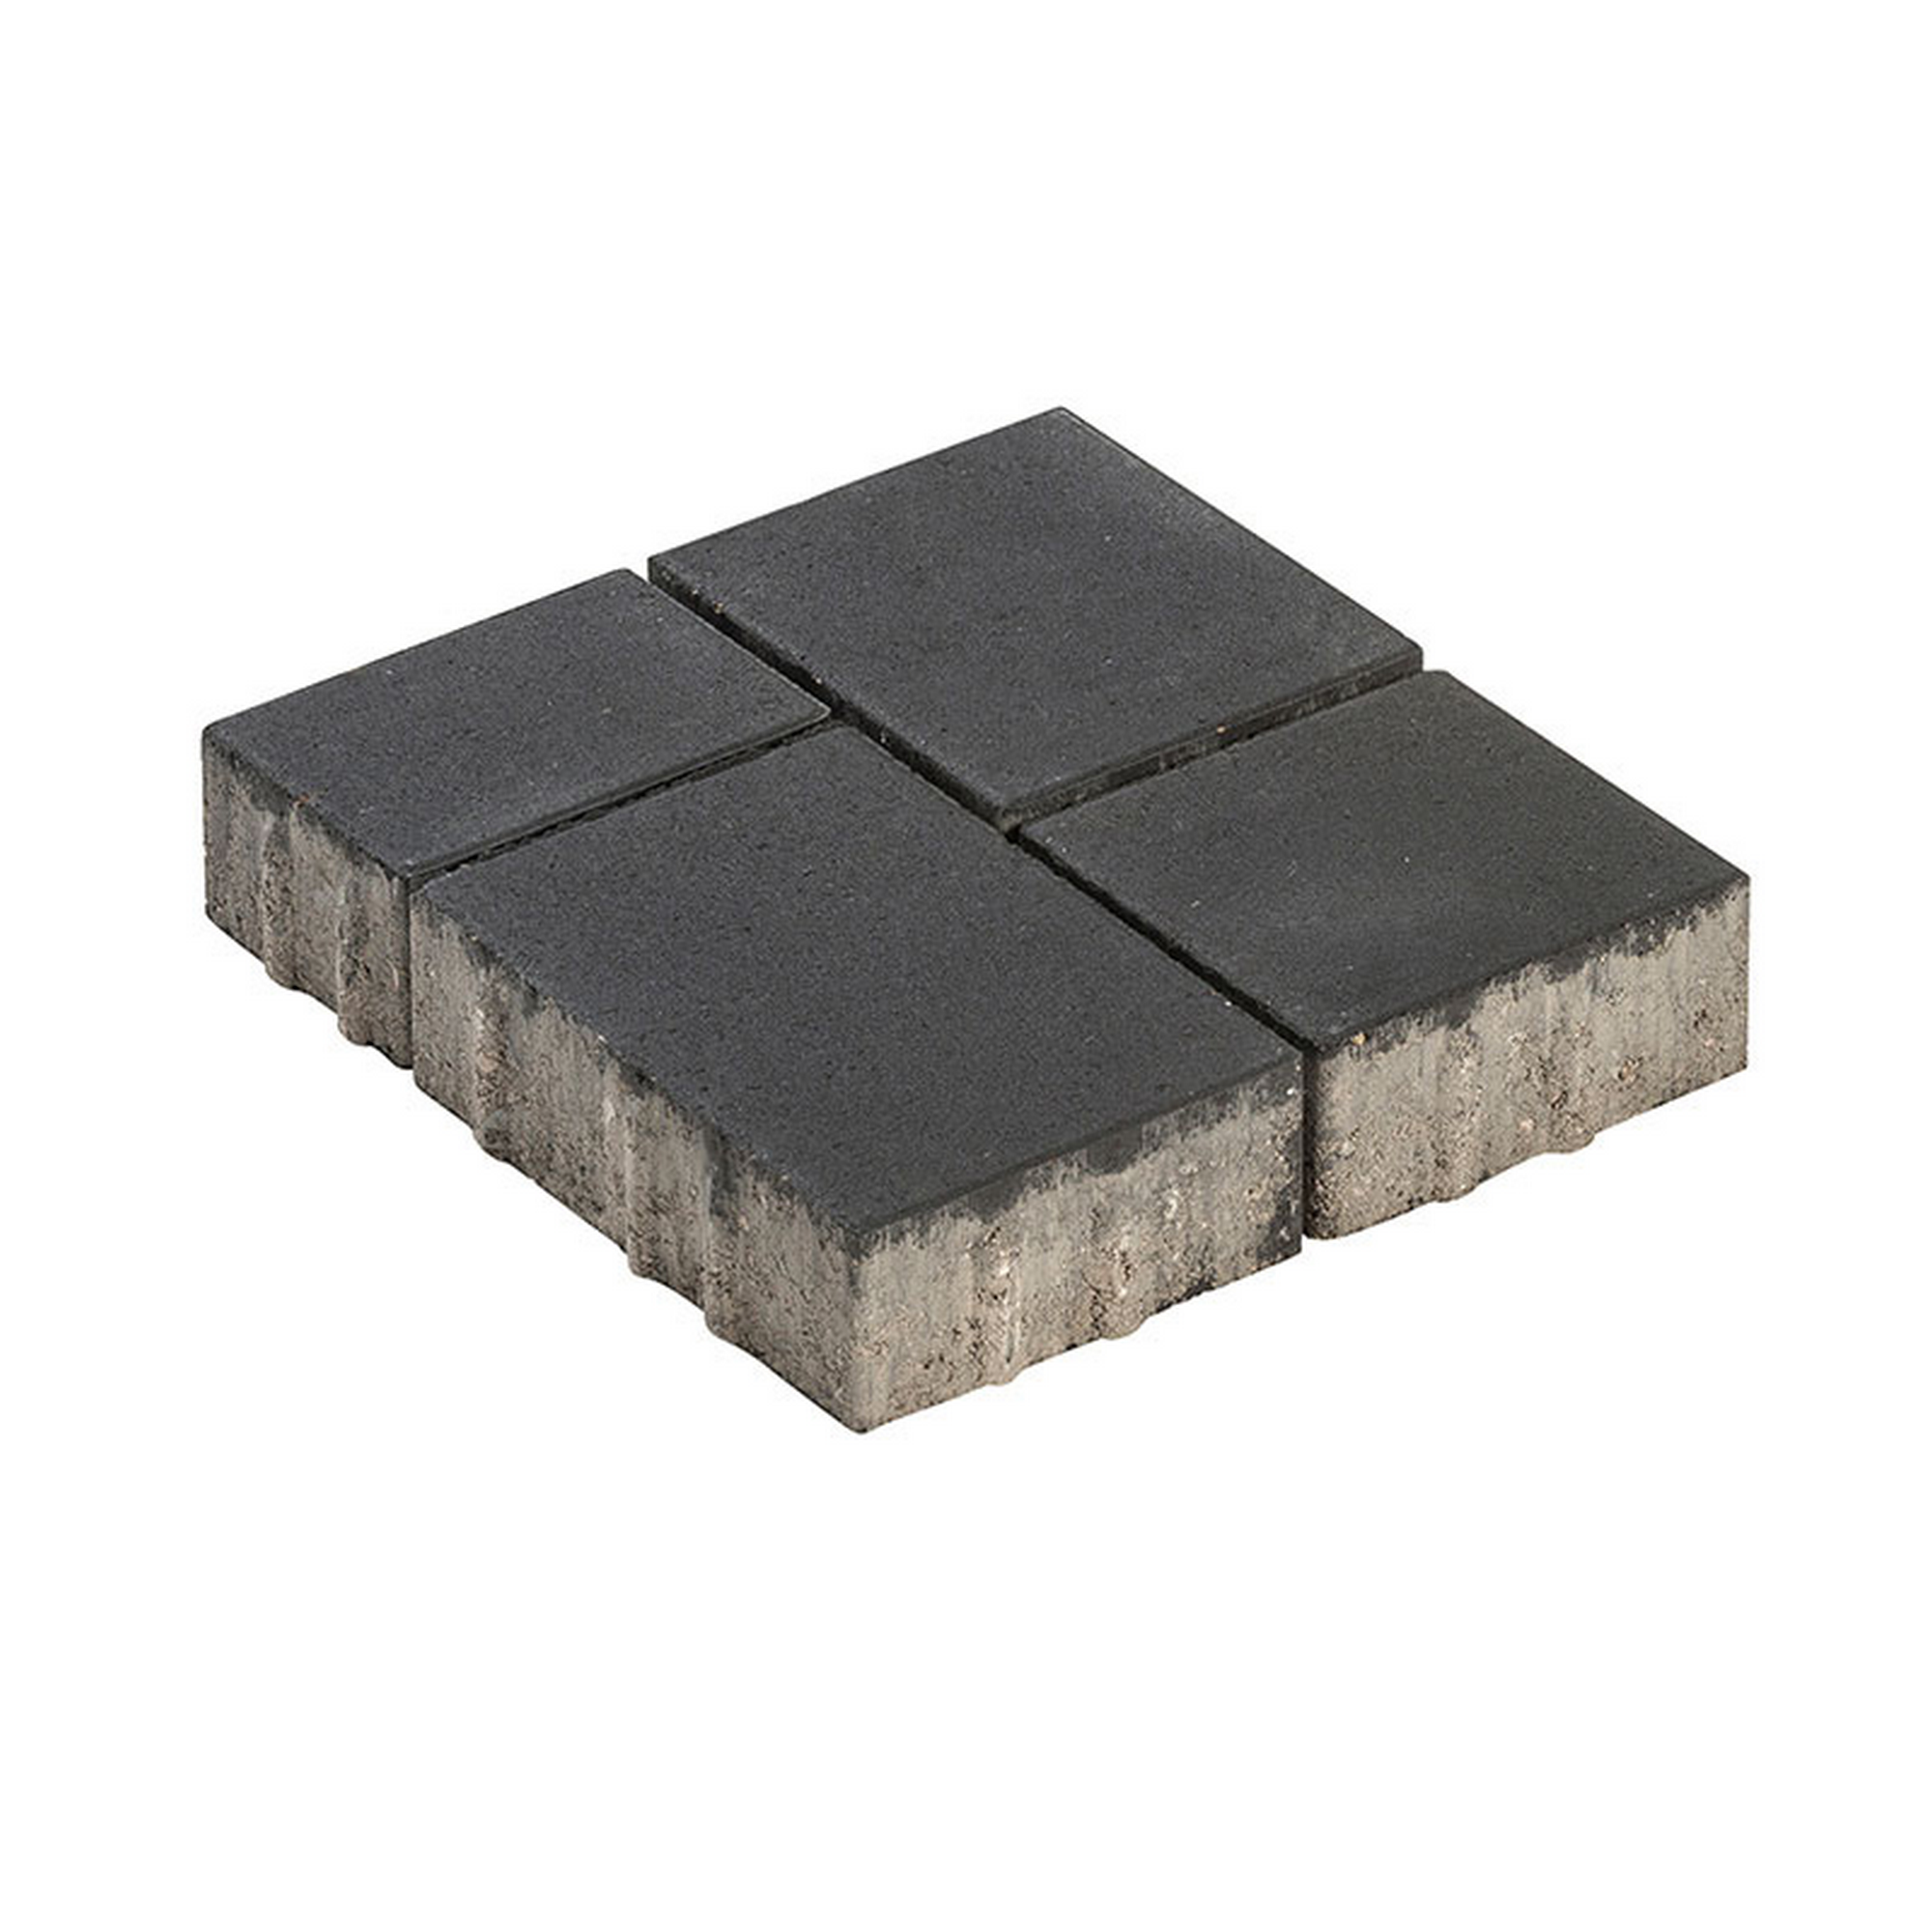 Antikpflaster 'Style' Beton basaltfarben 114 x 82 x 6 cm + product picture